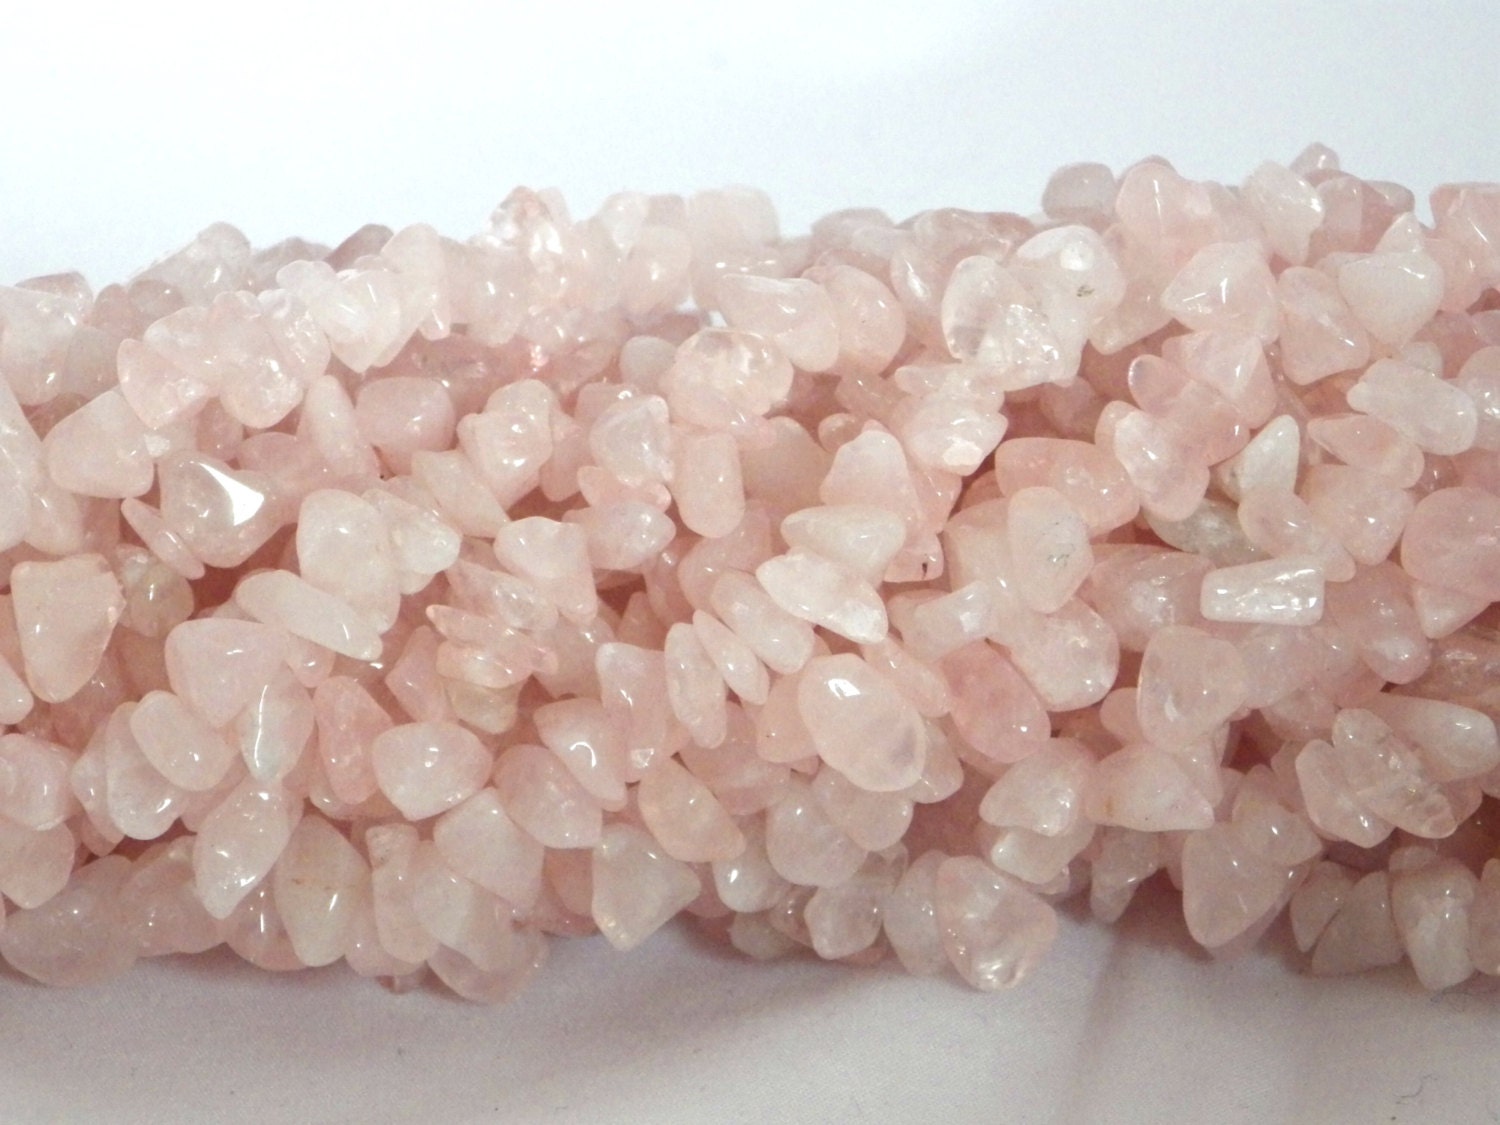 purchase 10 mm rose quartz beads separately